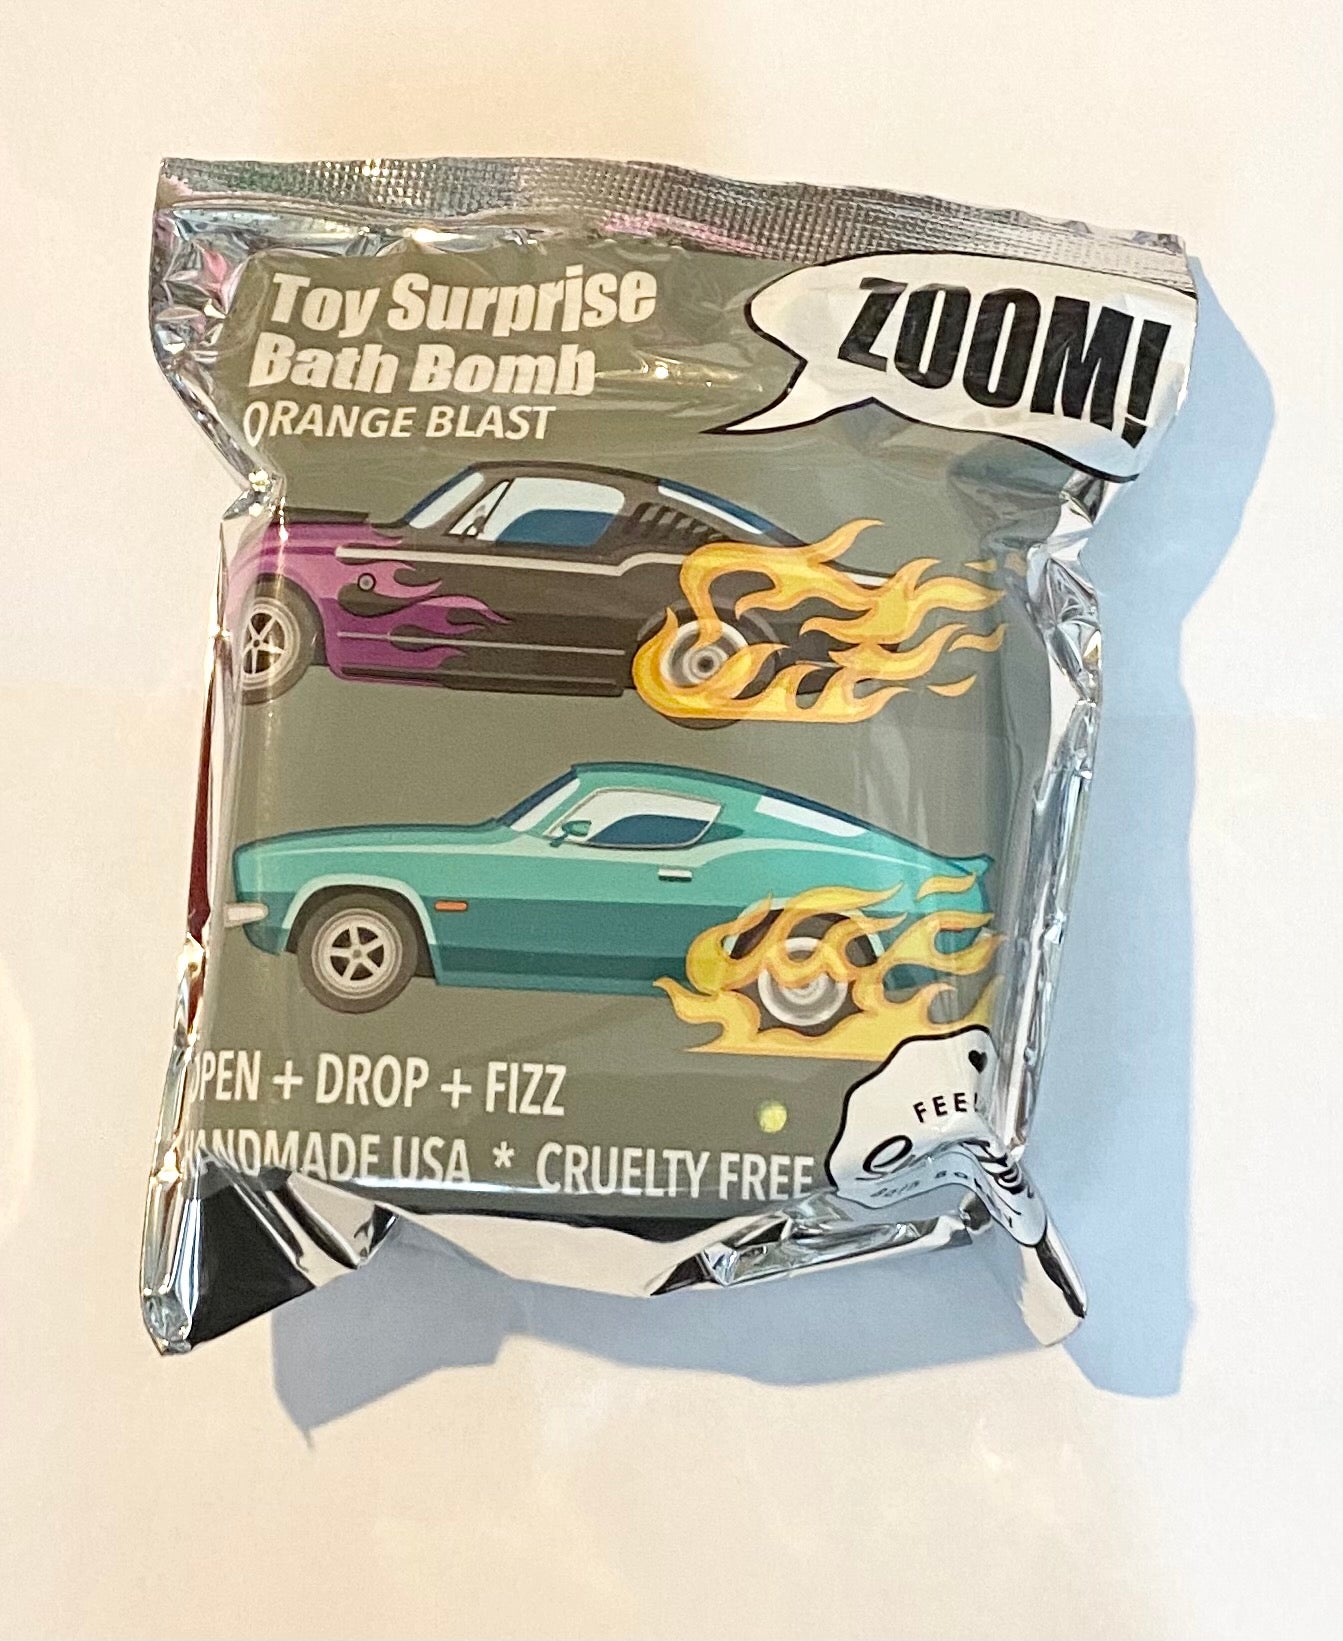 Zoom Toy Surprise Bath Bomb